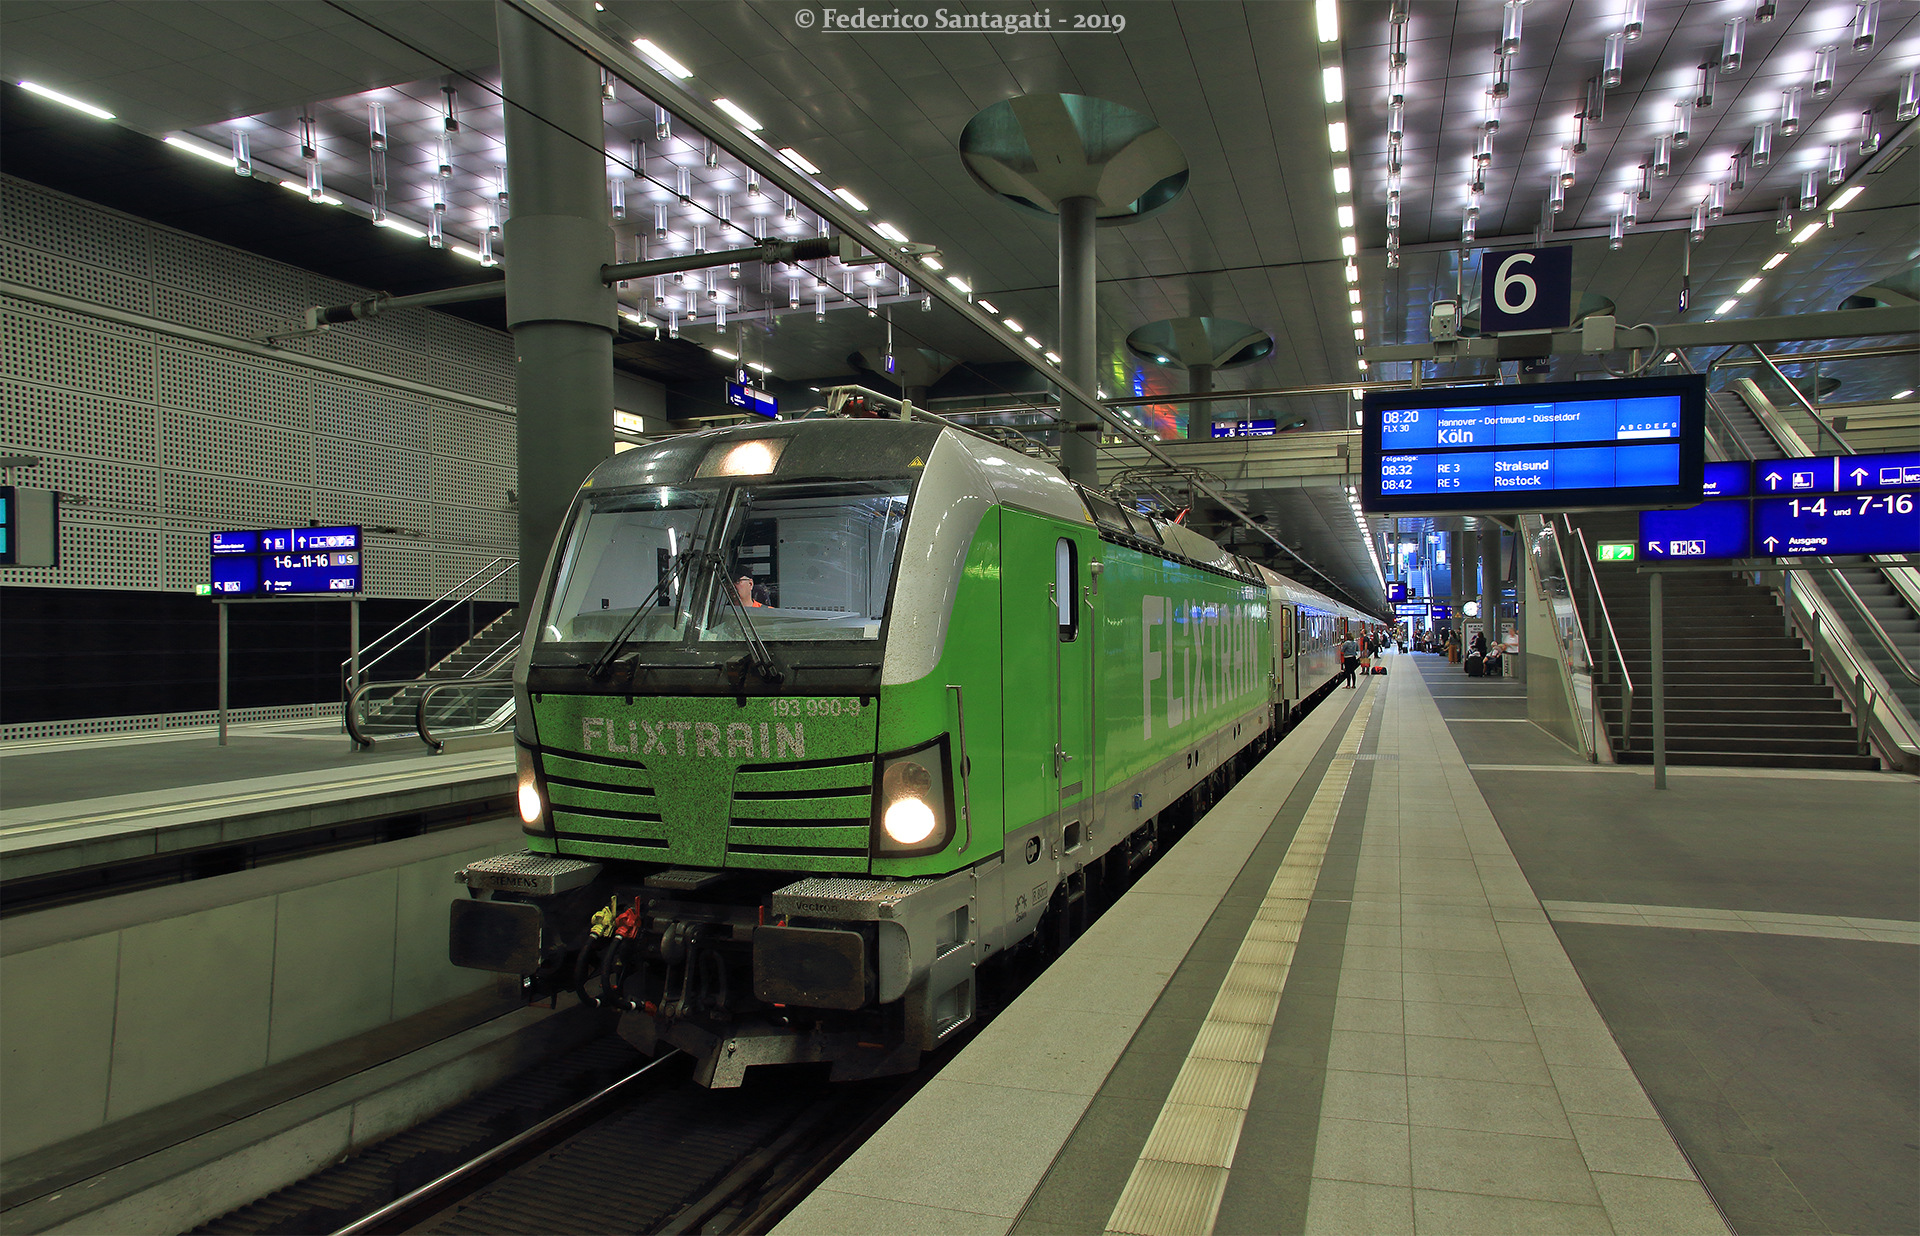 FLIX 193 990 / Berlin Hauptbahnhof, Berlin — Trainspo